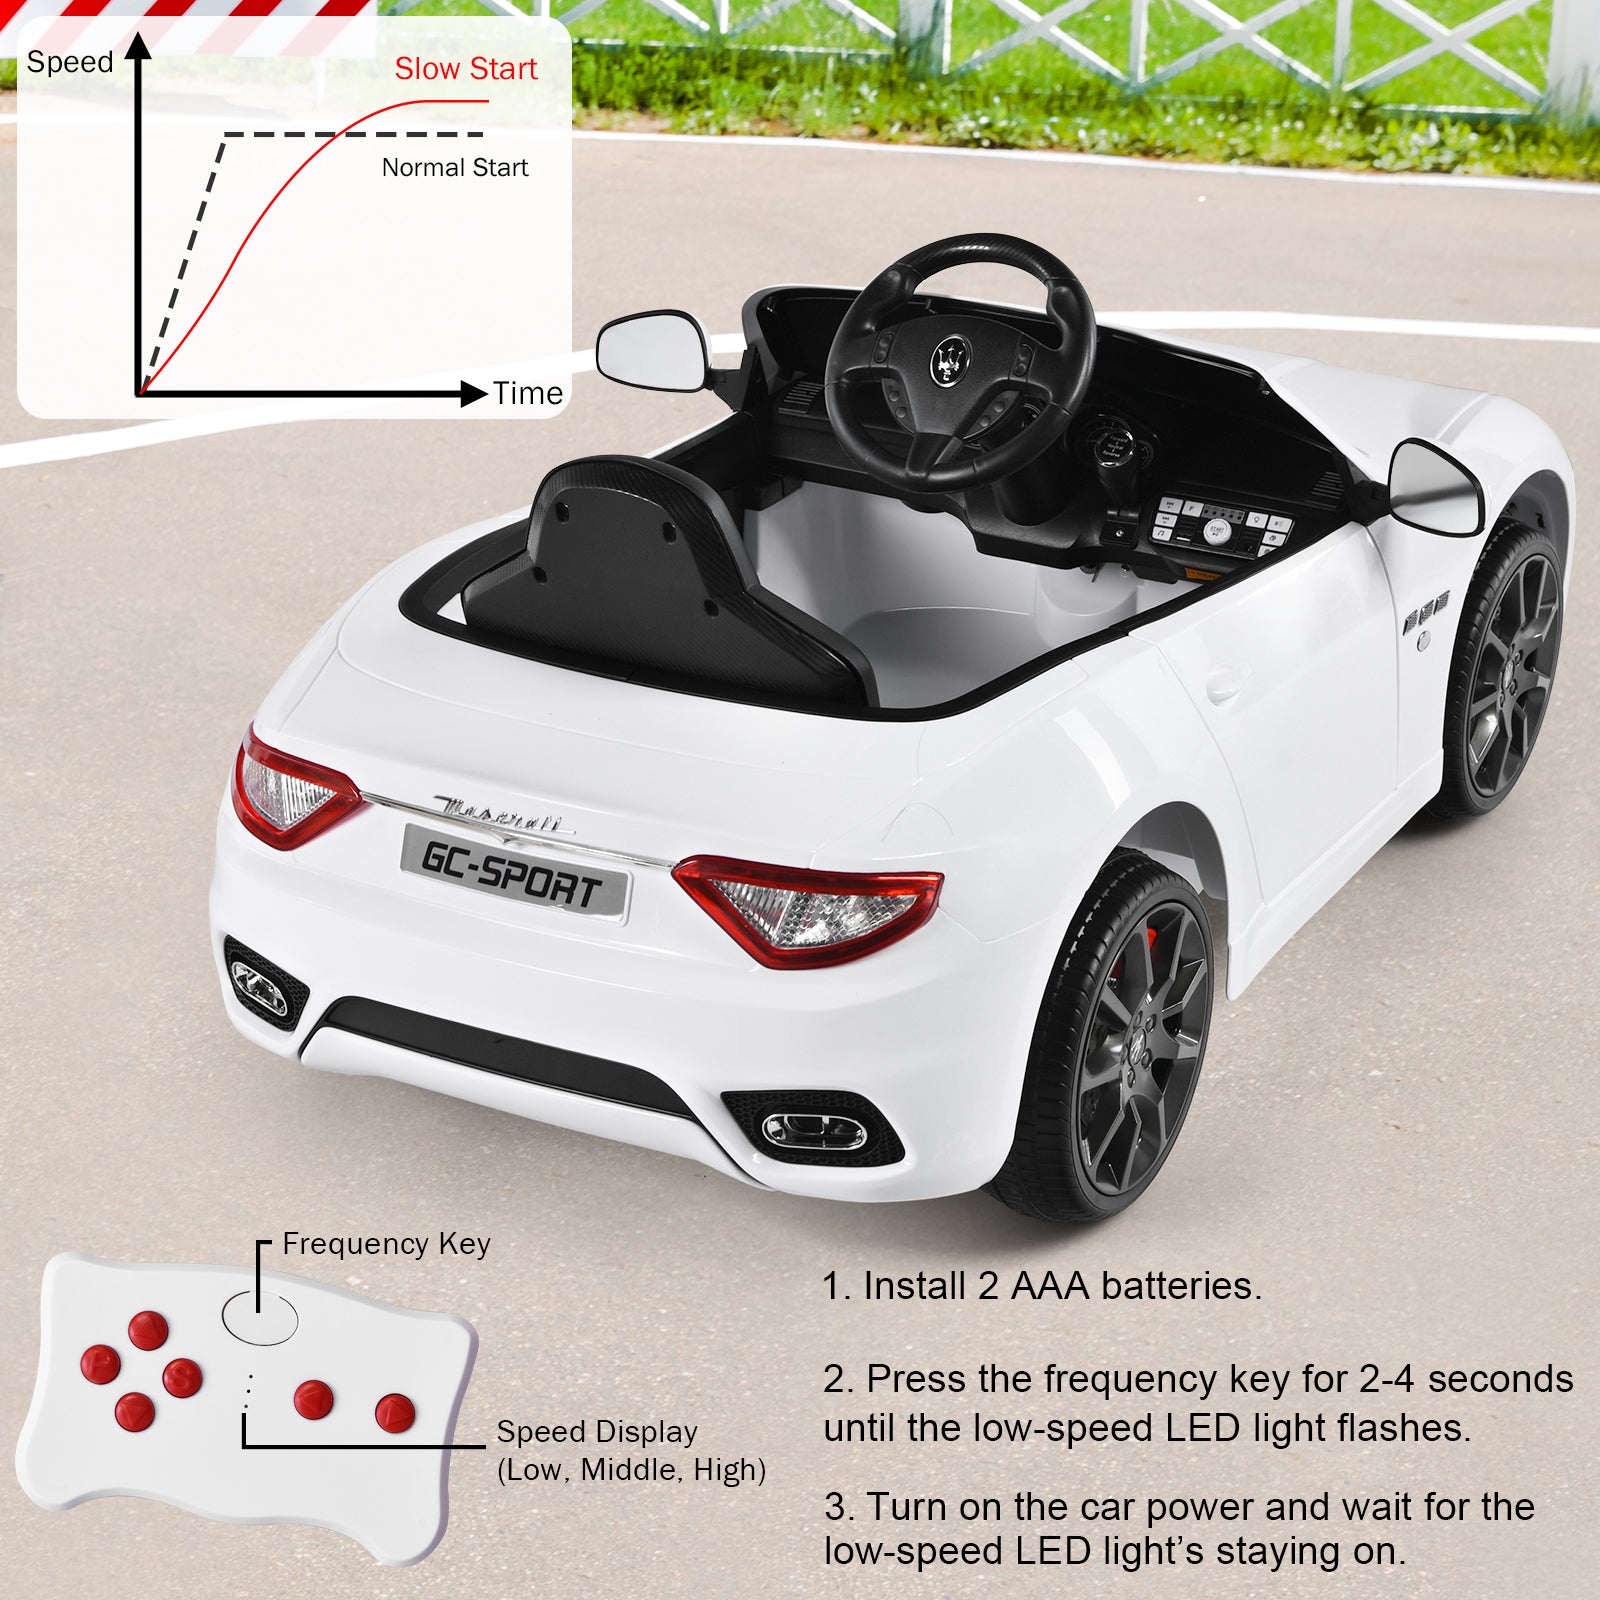 12V Battery Powered Compatible Maserati Toy Vehicle-White